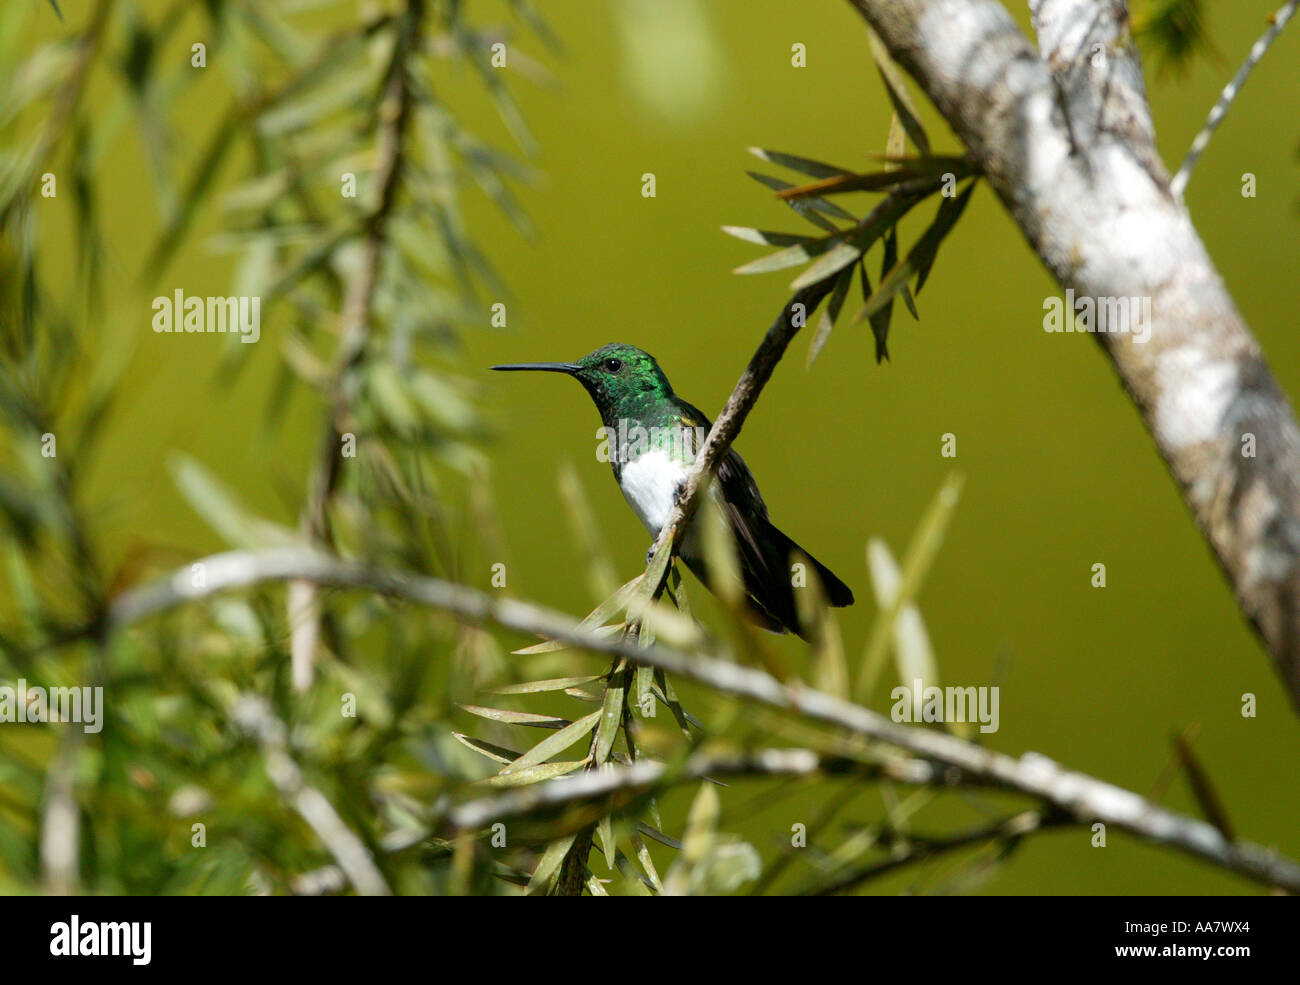 Snowy-bellied Hummingbird, Amazilia edward, on a branch in the forest near Cerro Punta in the Chiriqui province, Republic of Panama. Stock Photo